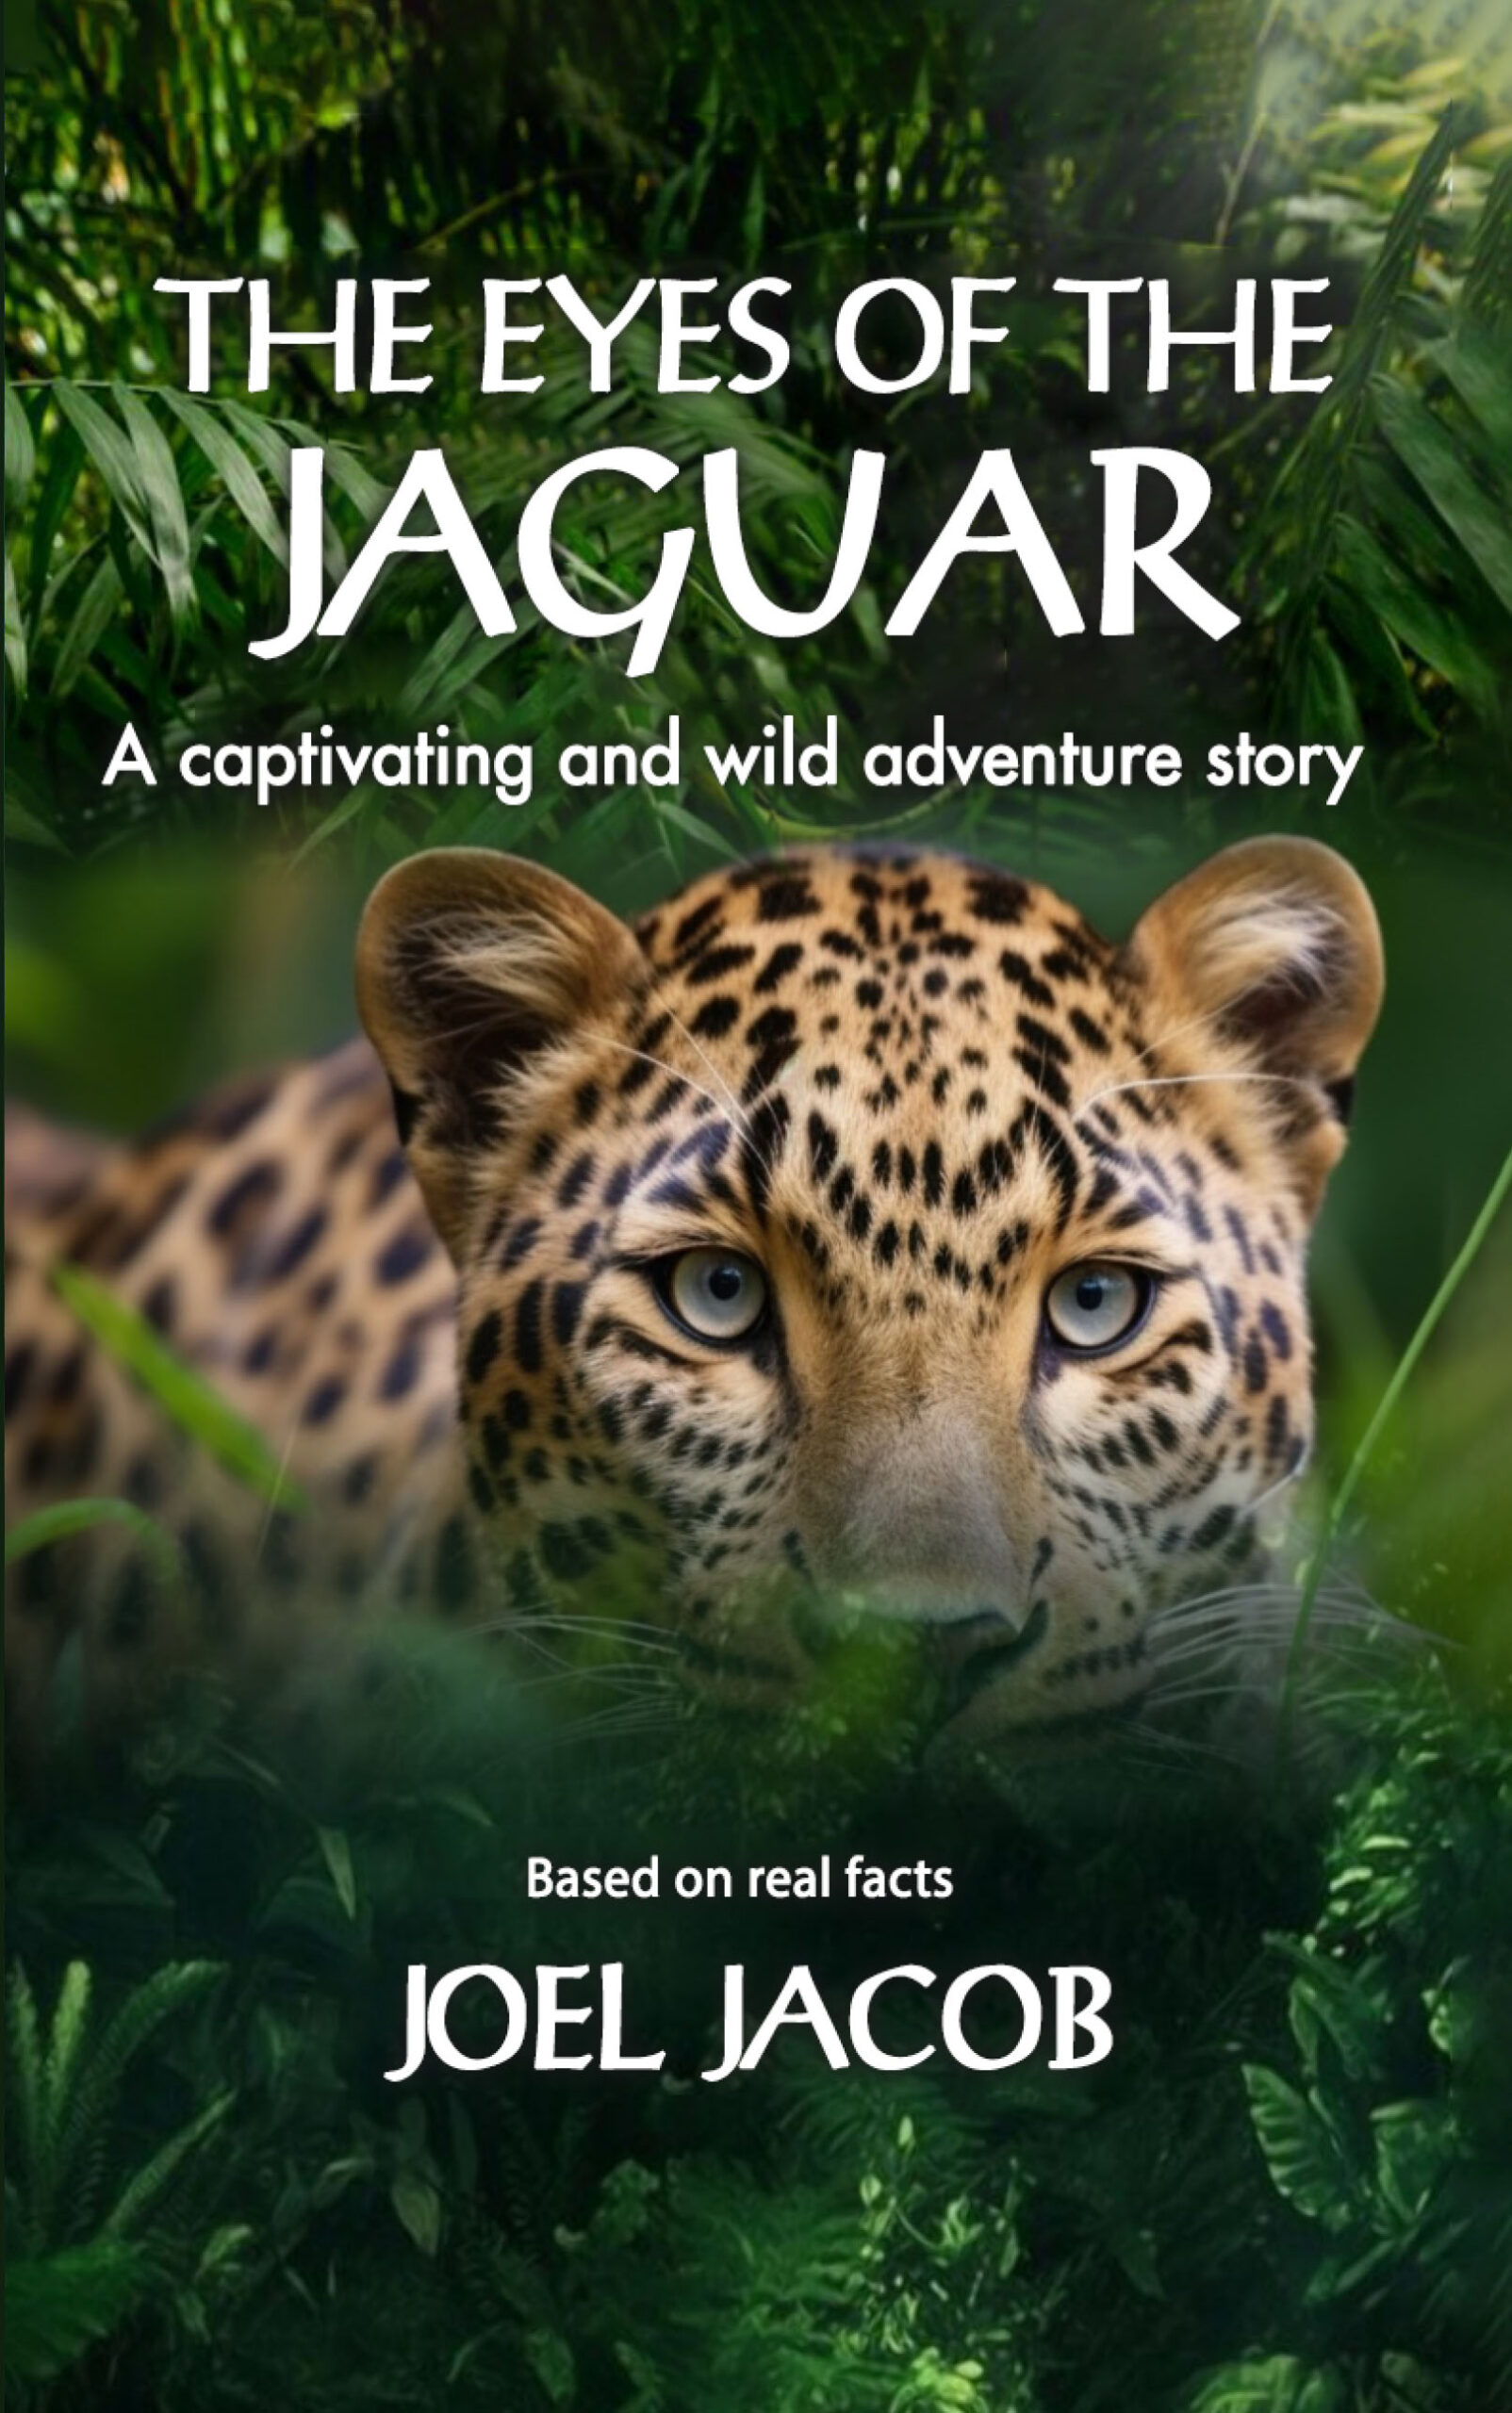 The Eyes of the Jaguar. by Joel Jacob